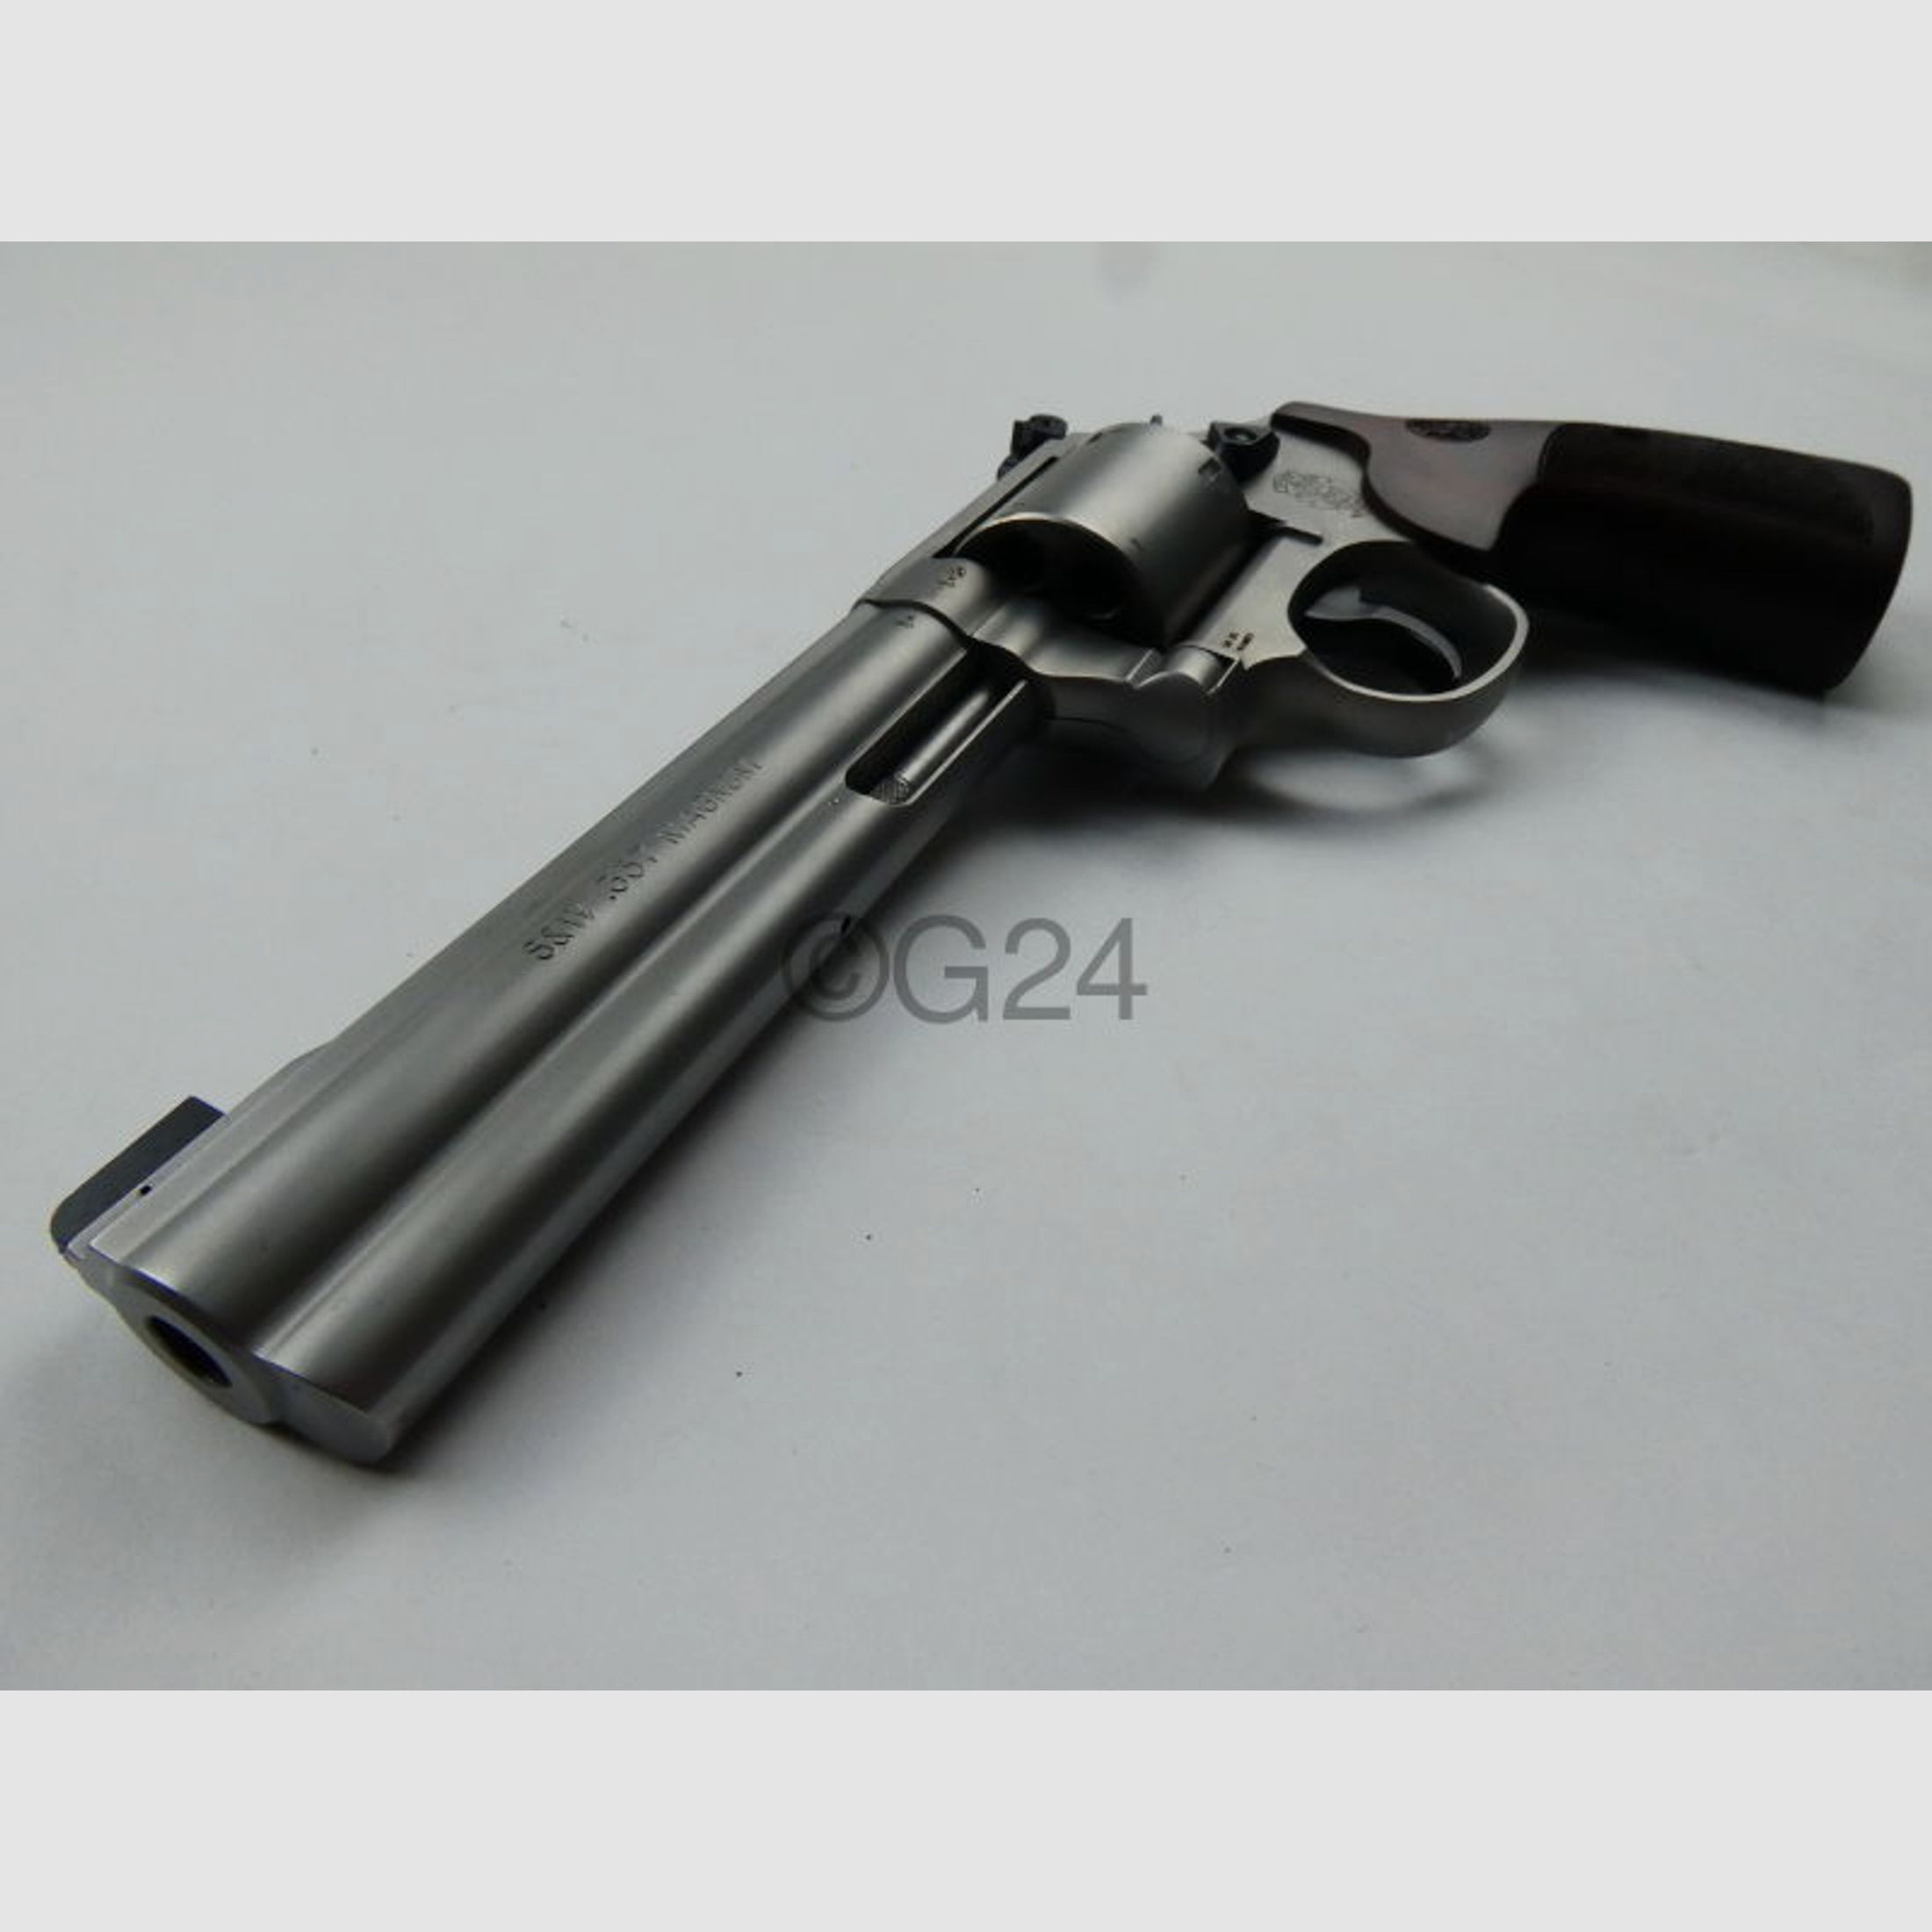 Smith & Wesson	 686-6 International